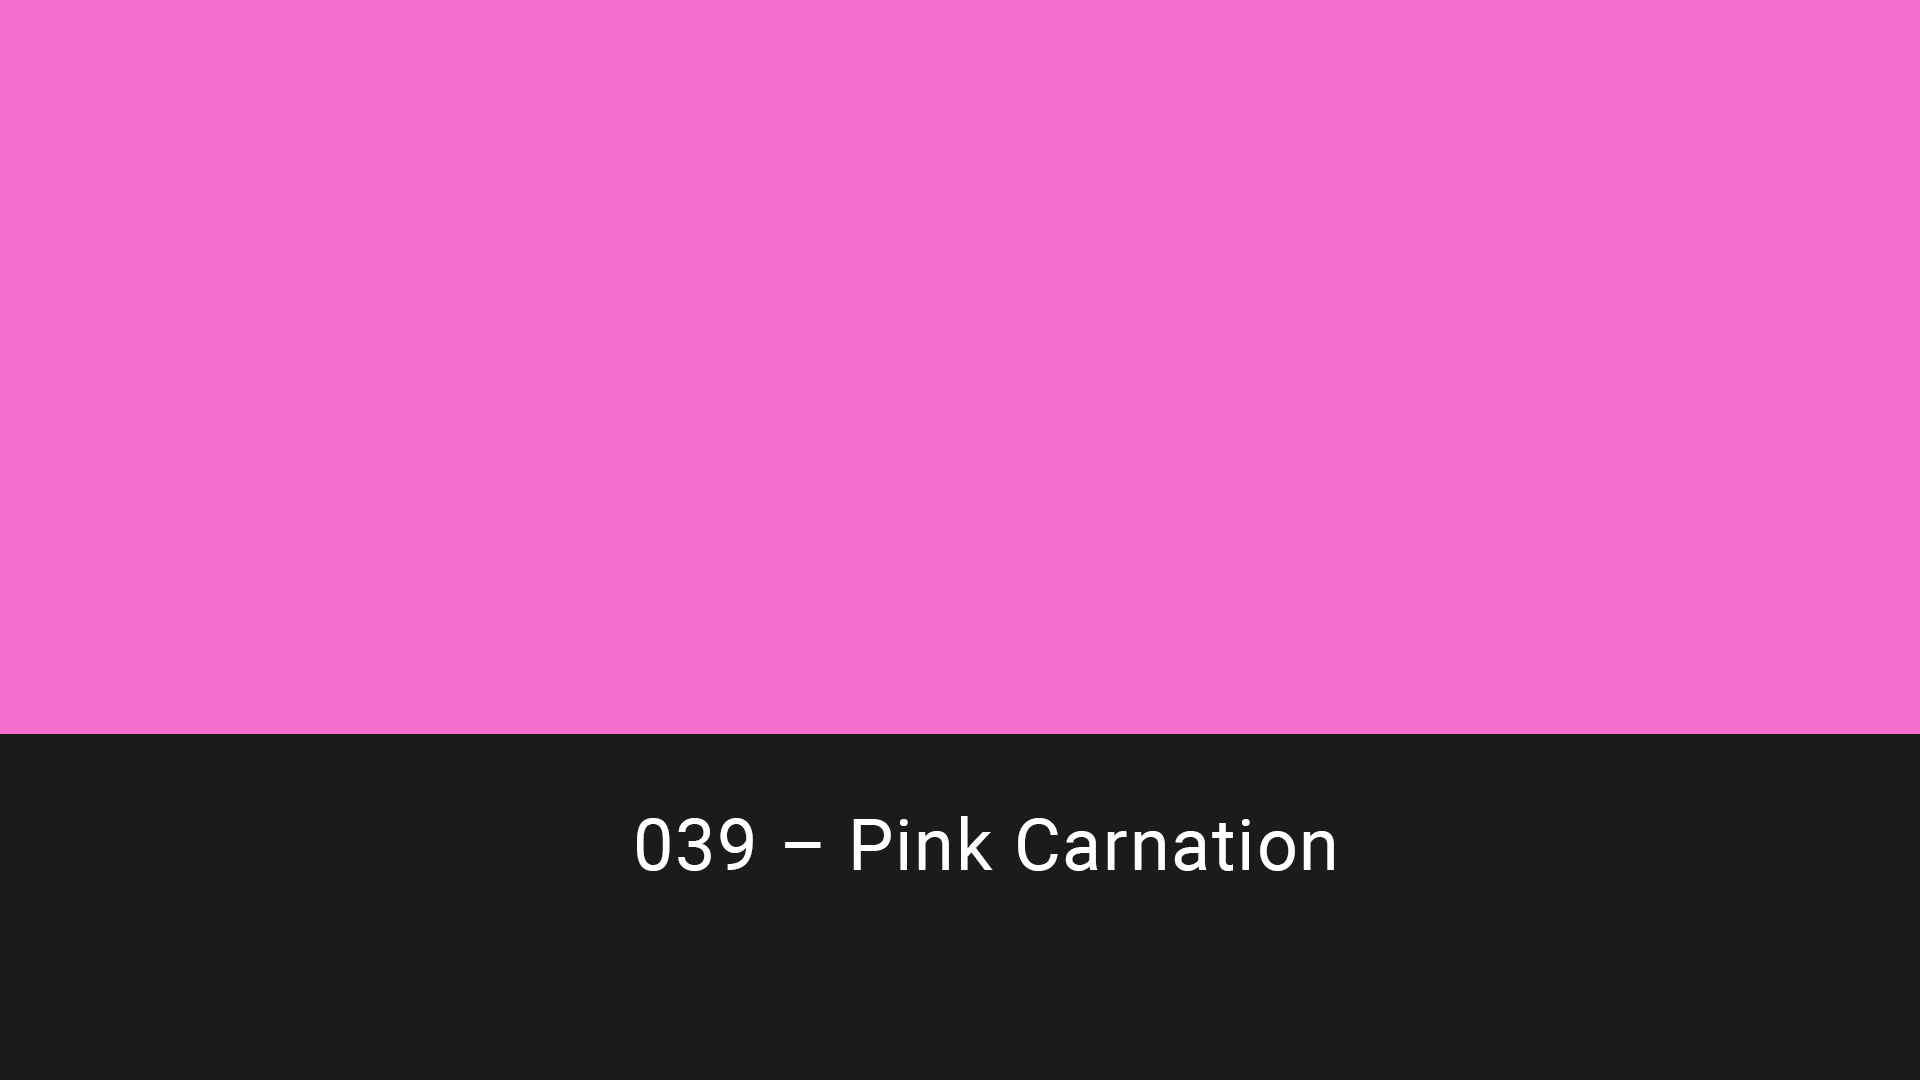 Cotech filters 039 Pink Carnation